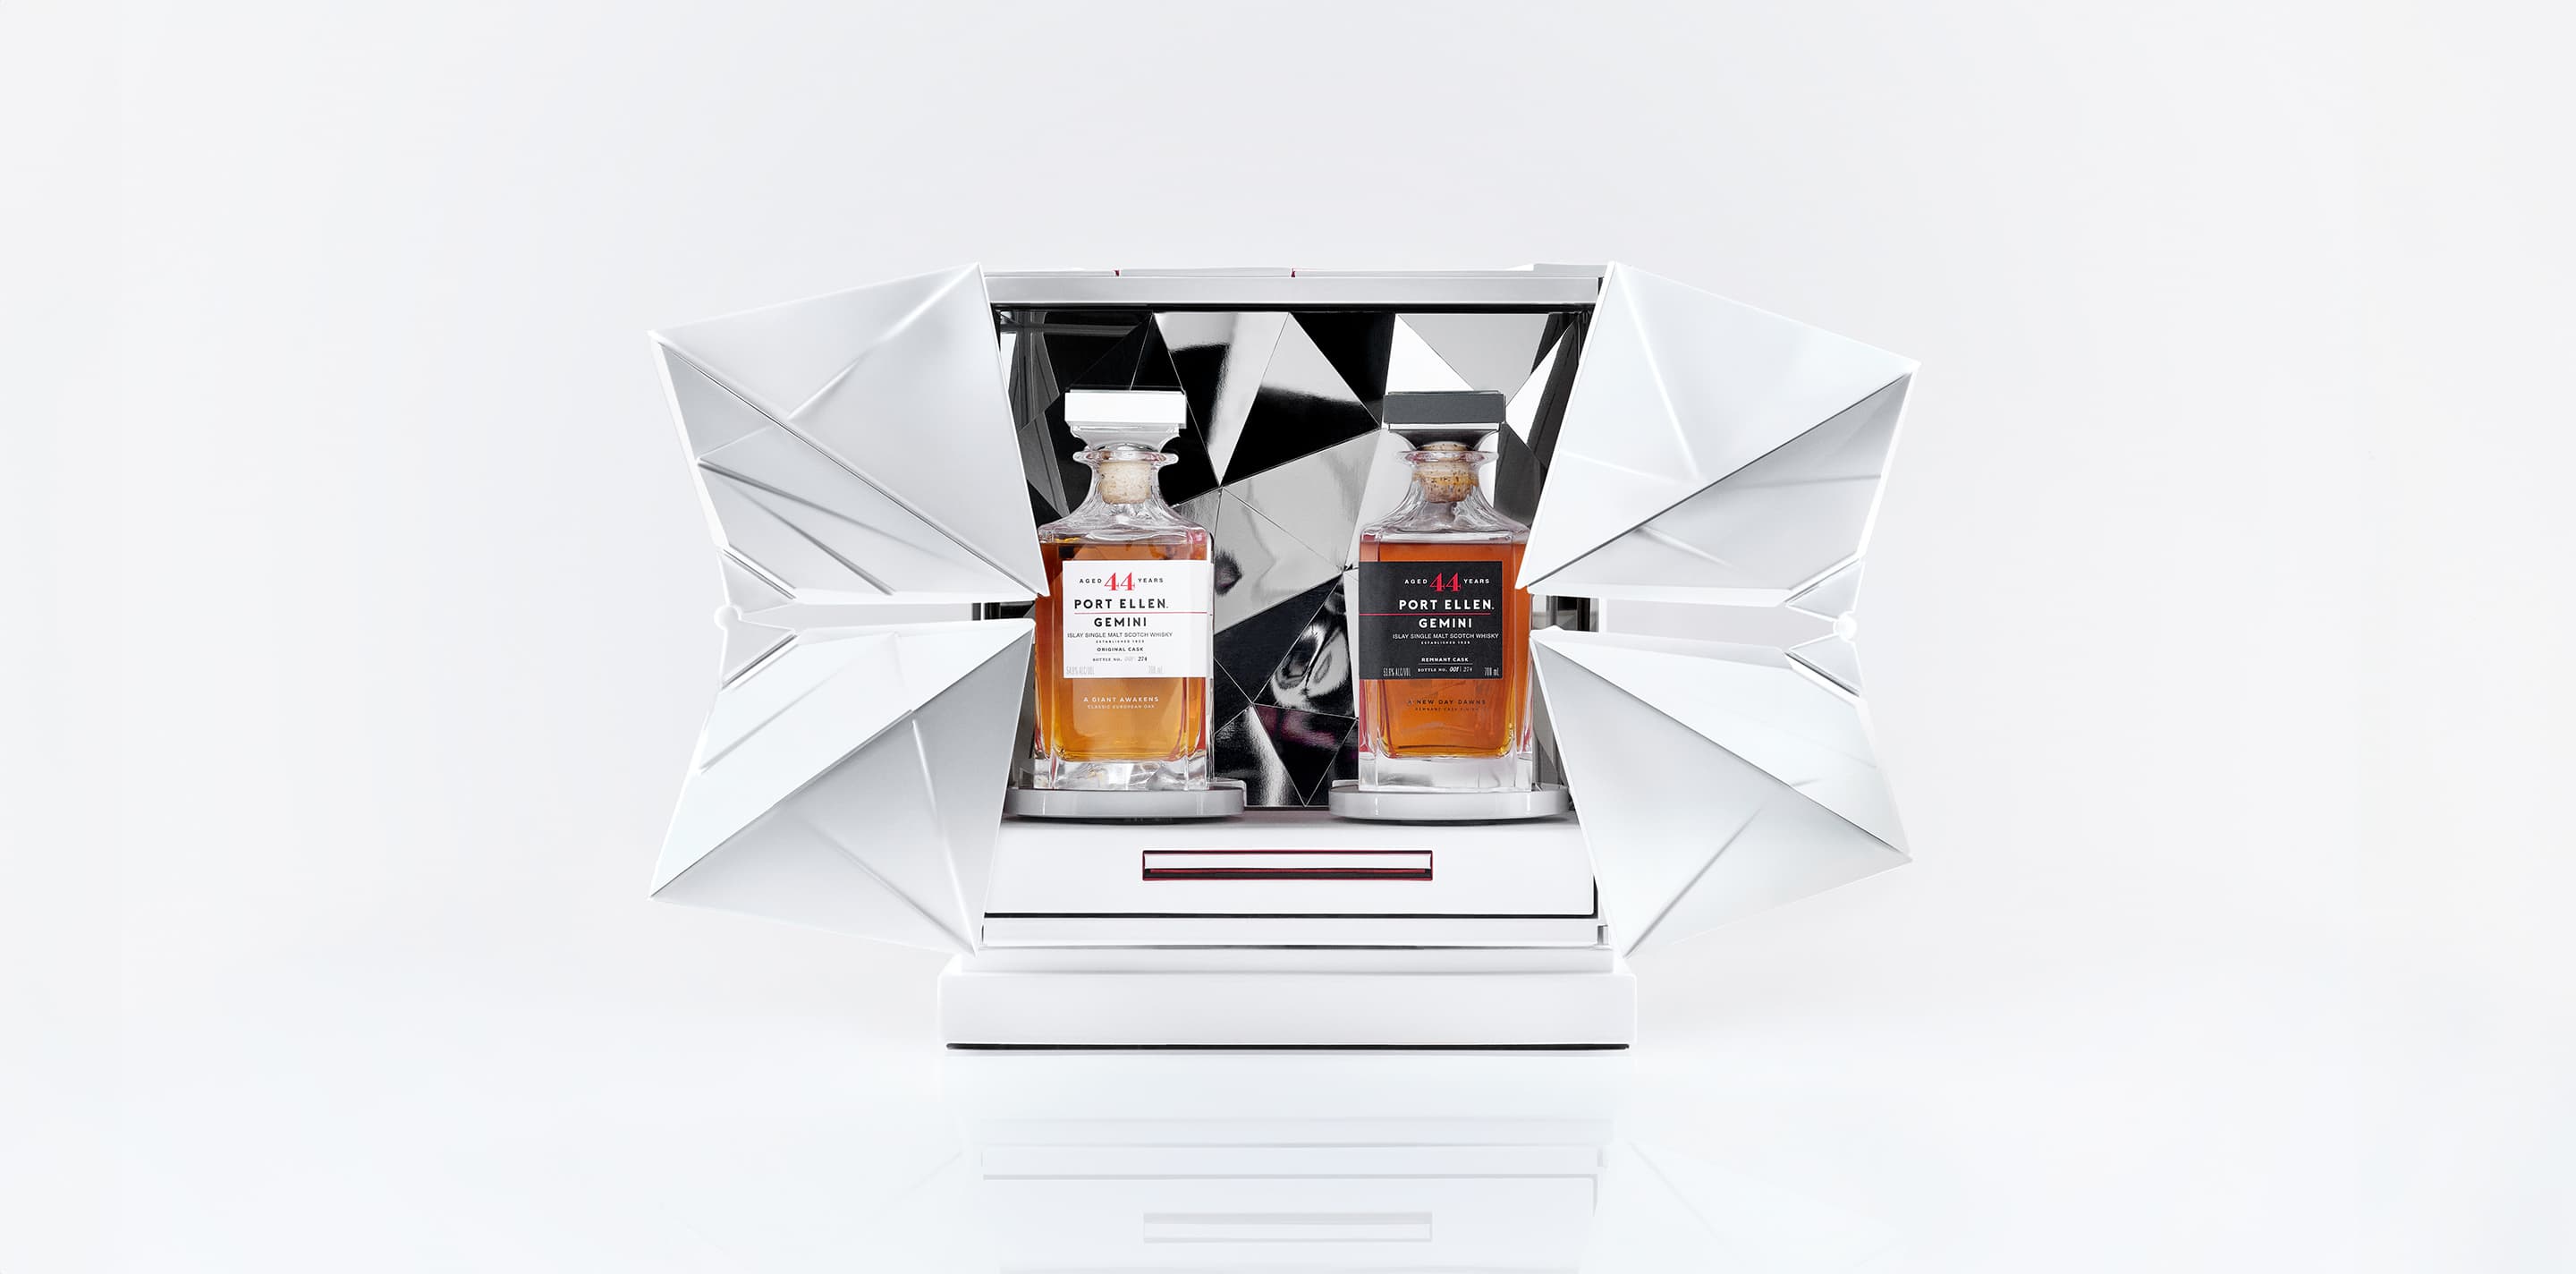 Two bottles of gemini port ellen whisky in a futuristic white case